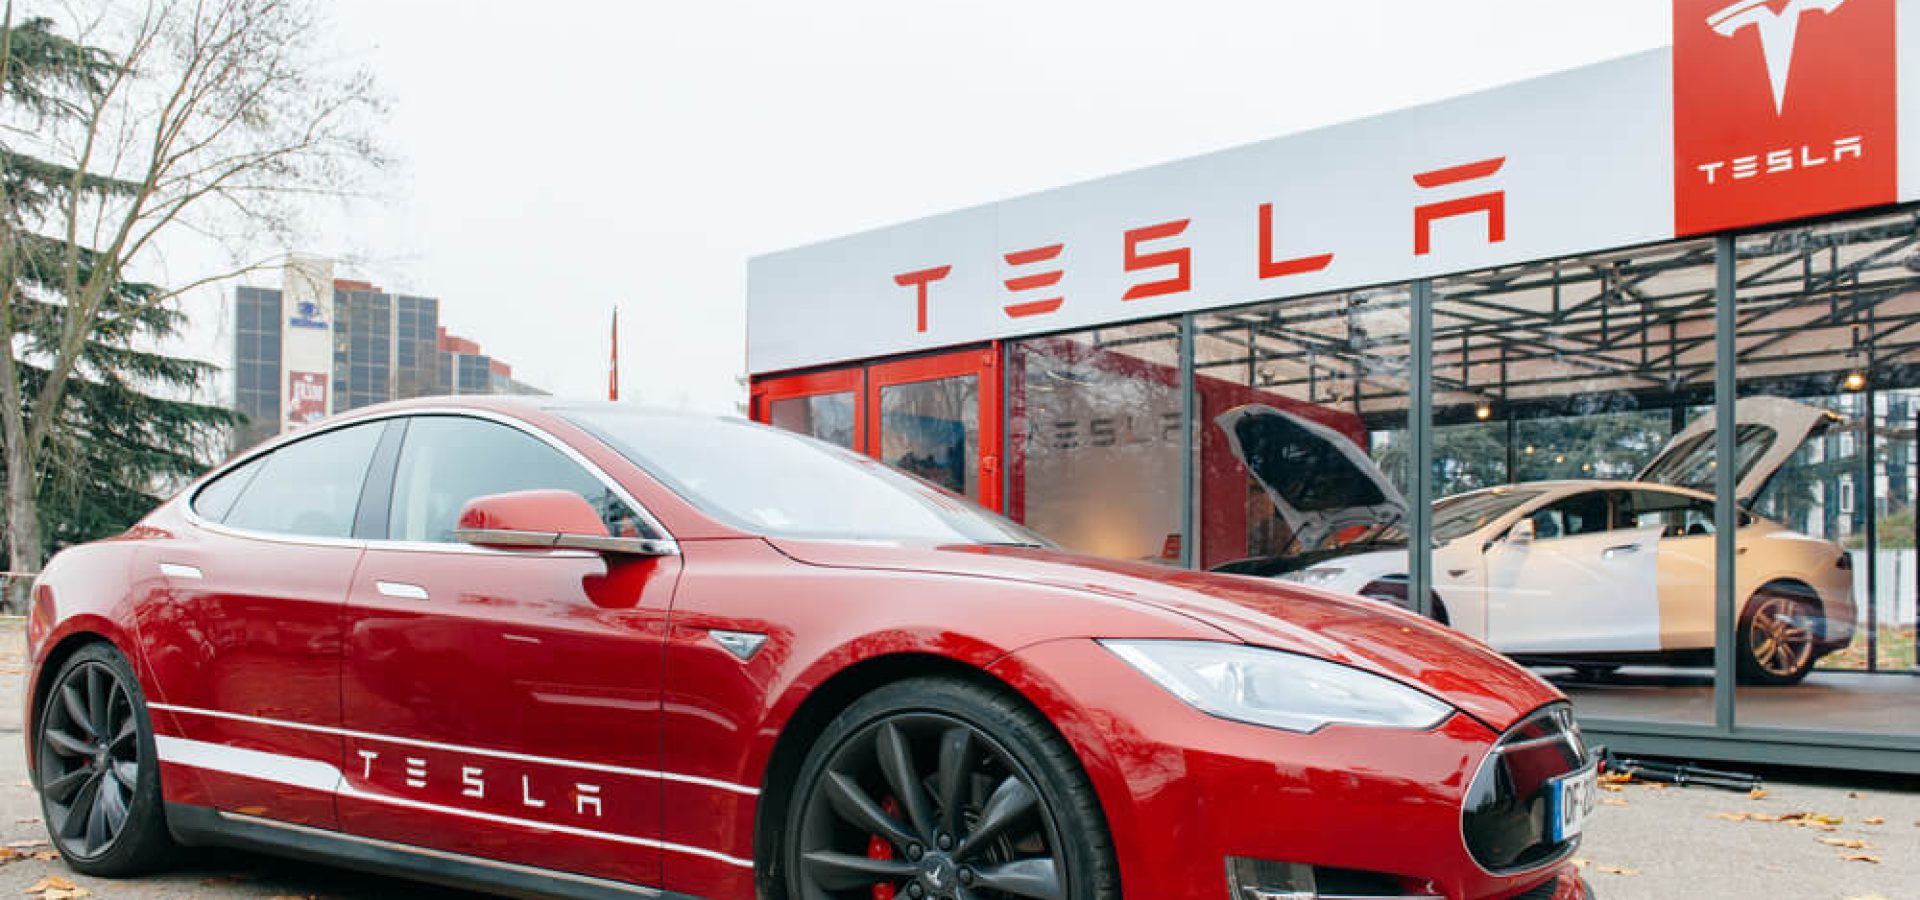 New Tesla Model S showroom.